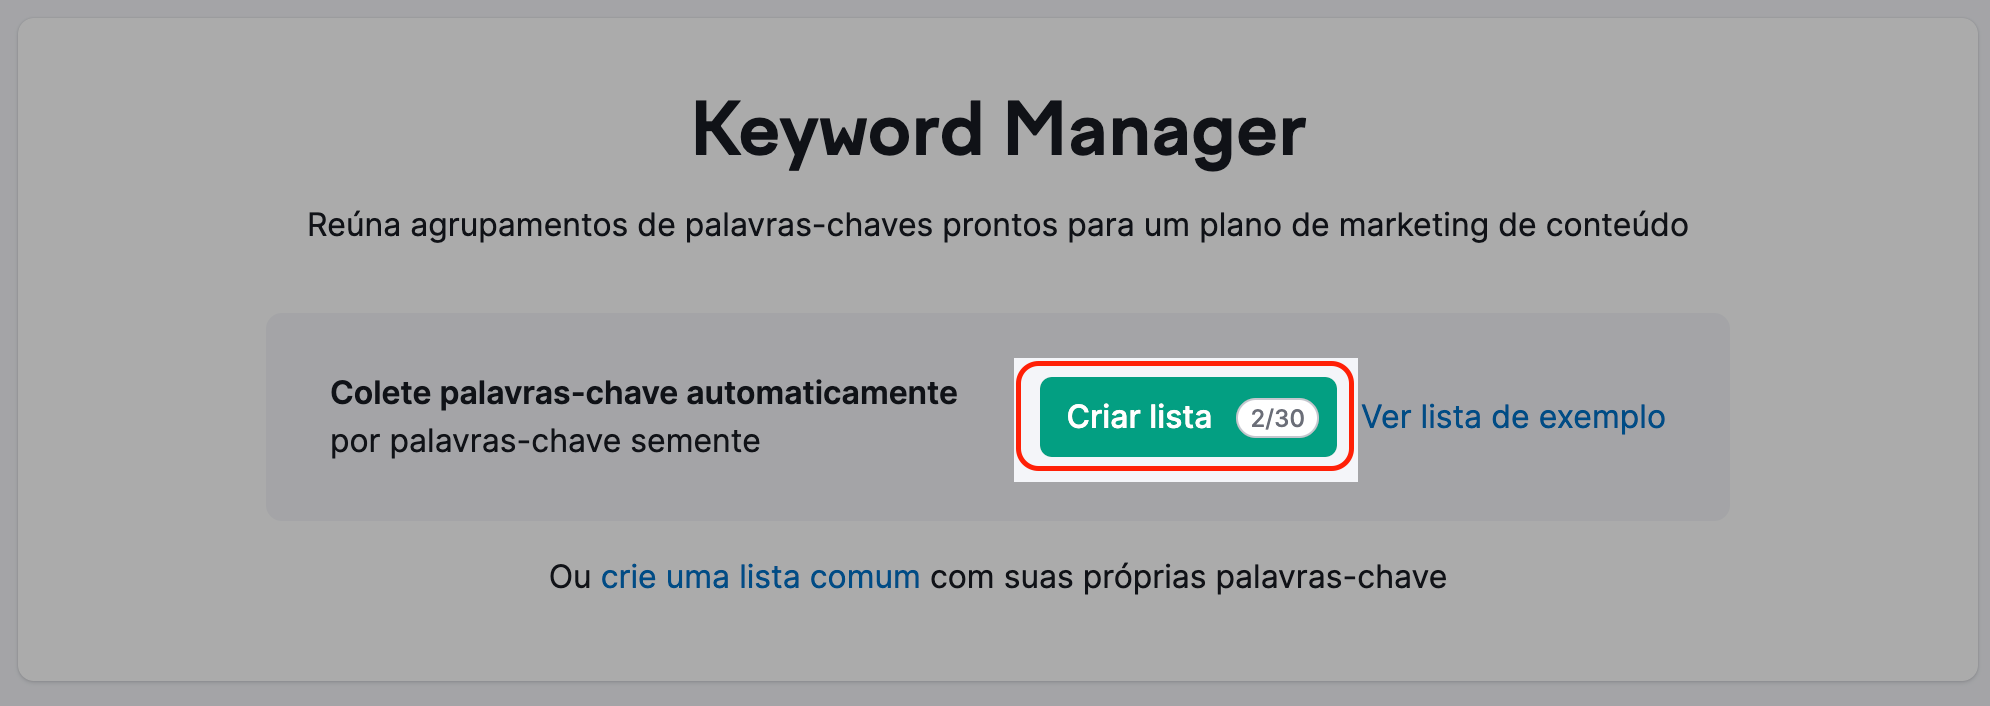 keyword manager tool